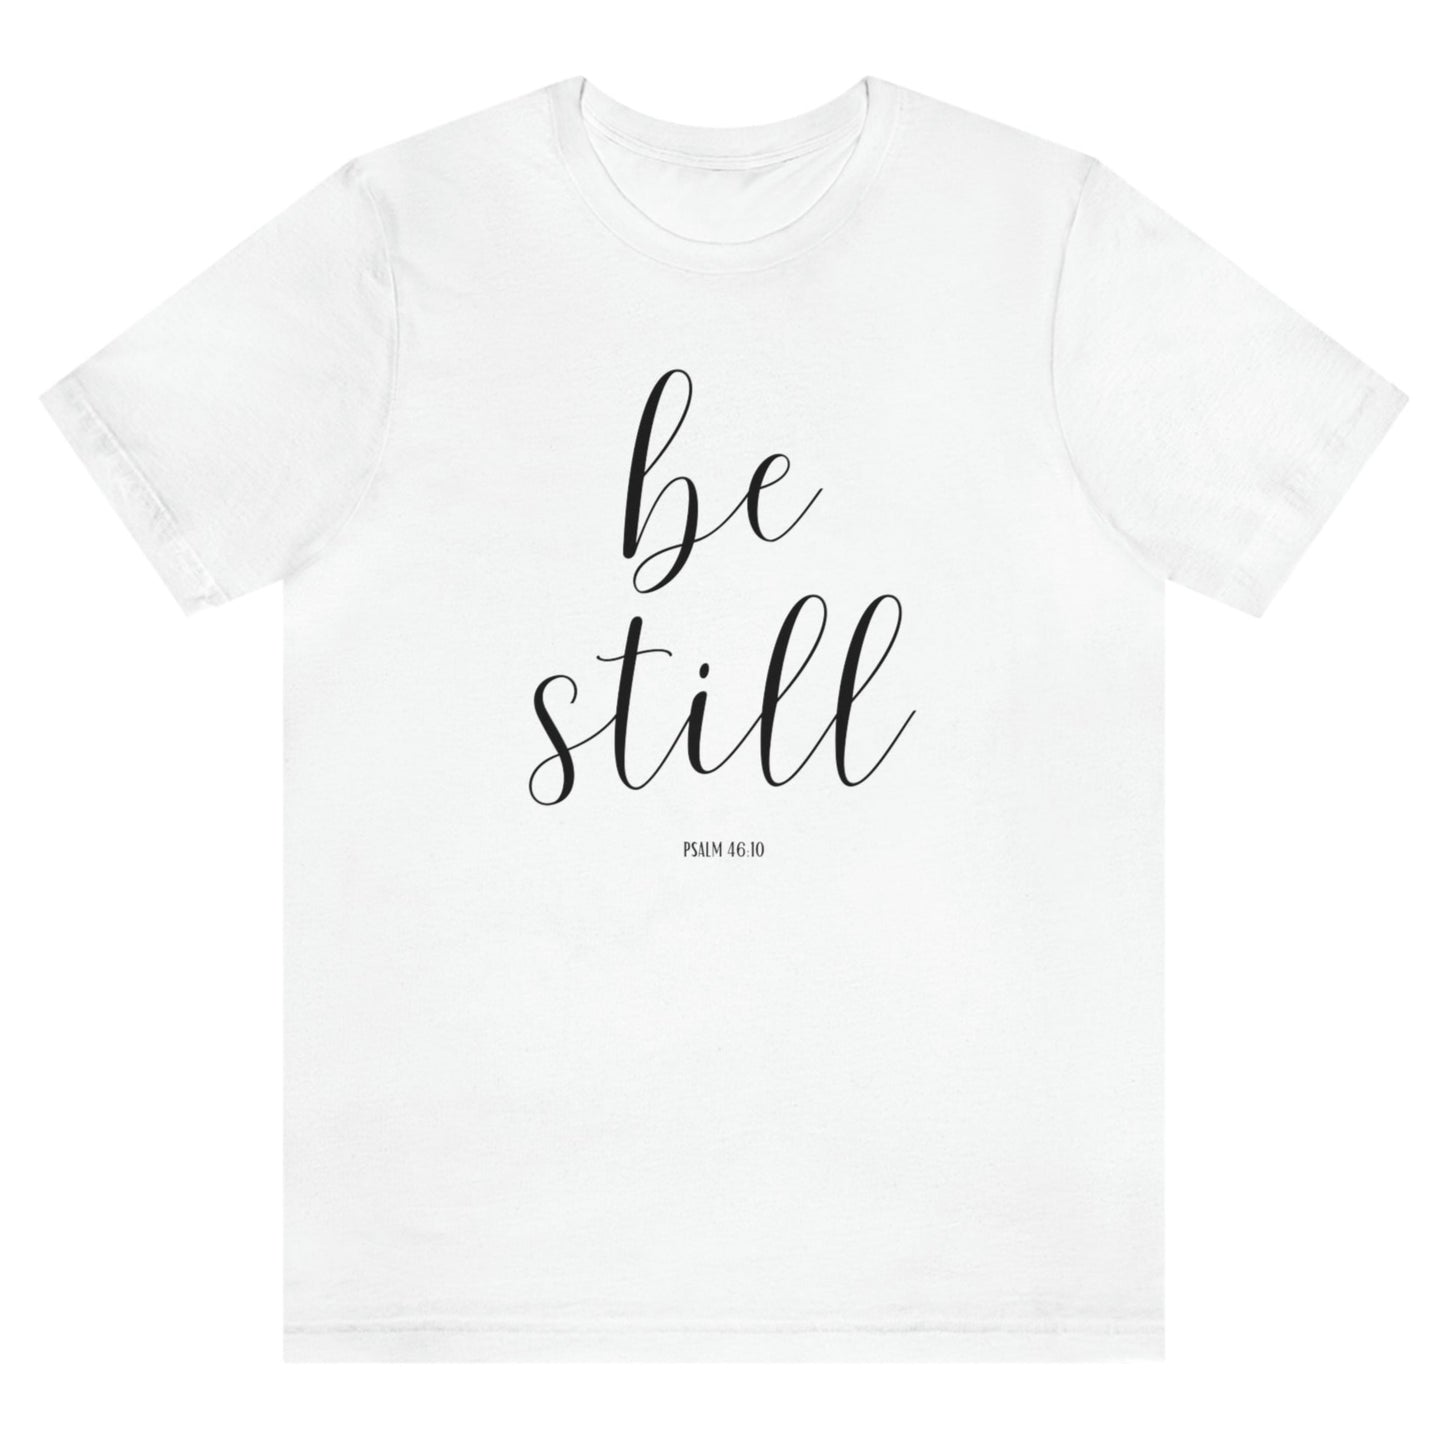 be-still-psalm-46-10-white-t-shirt-womens-christian-inspiring